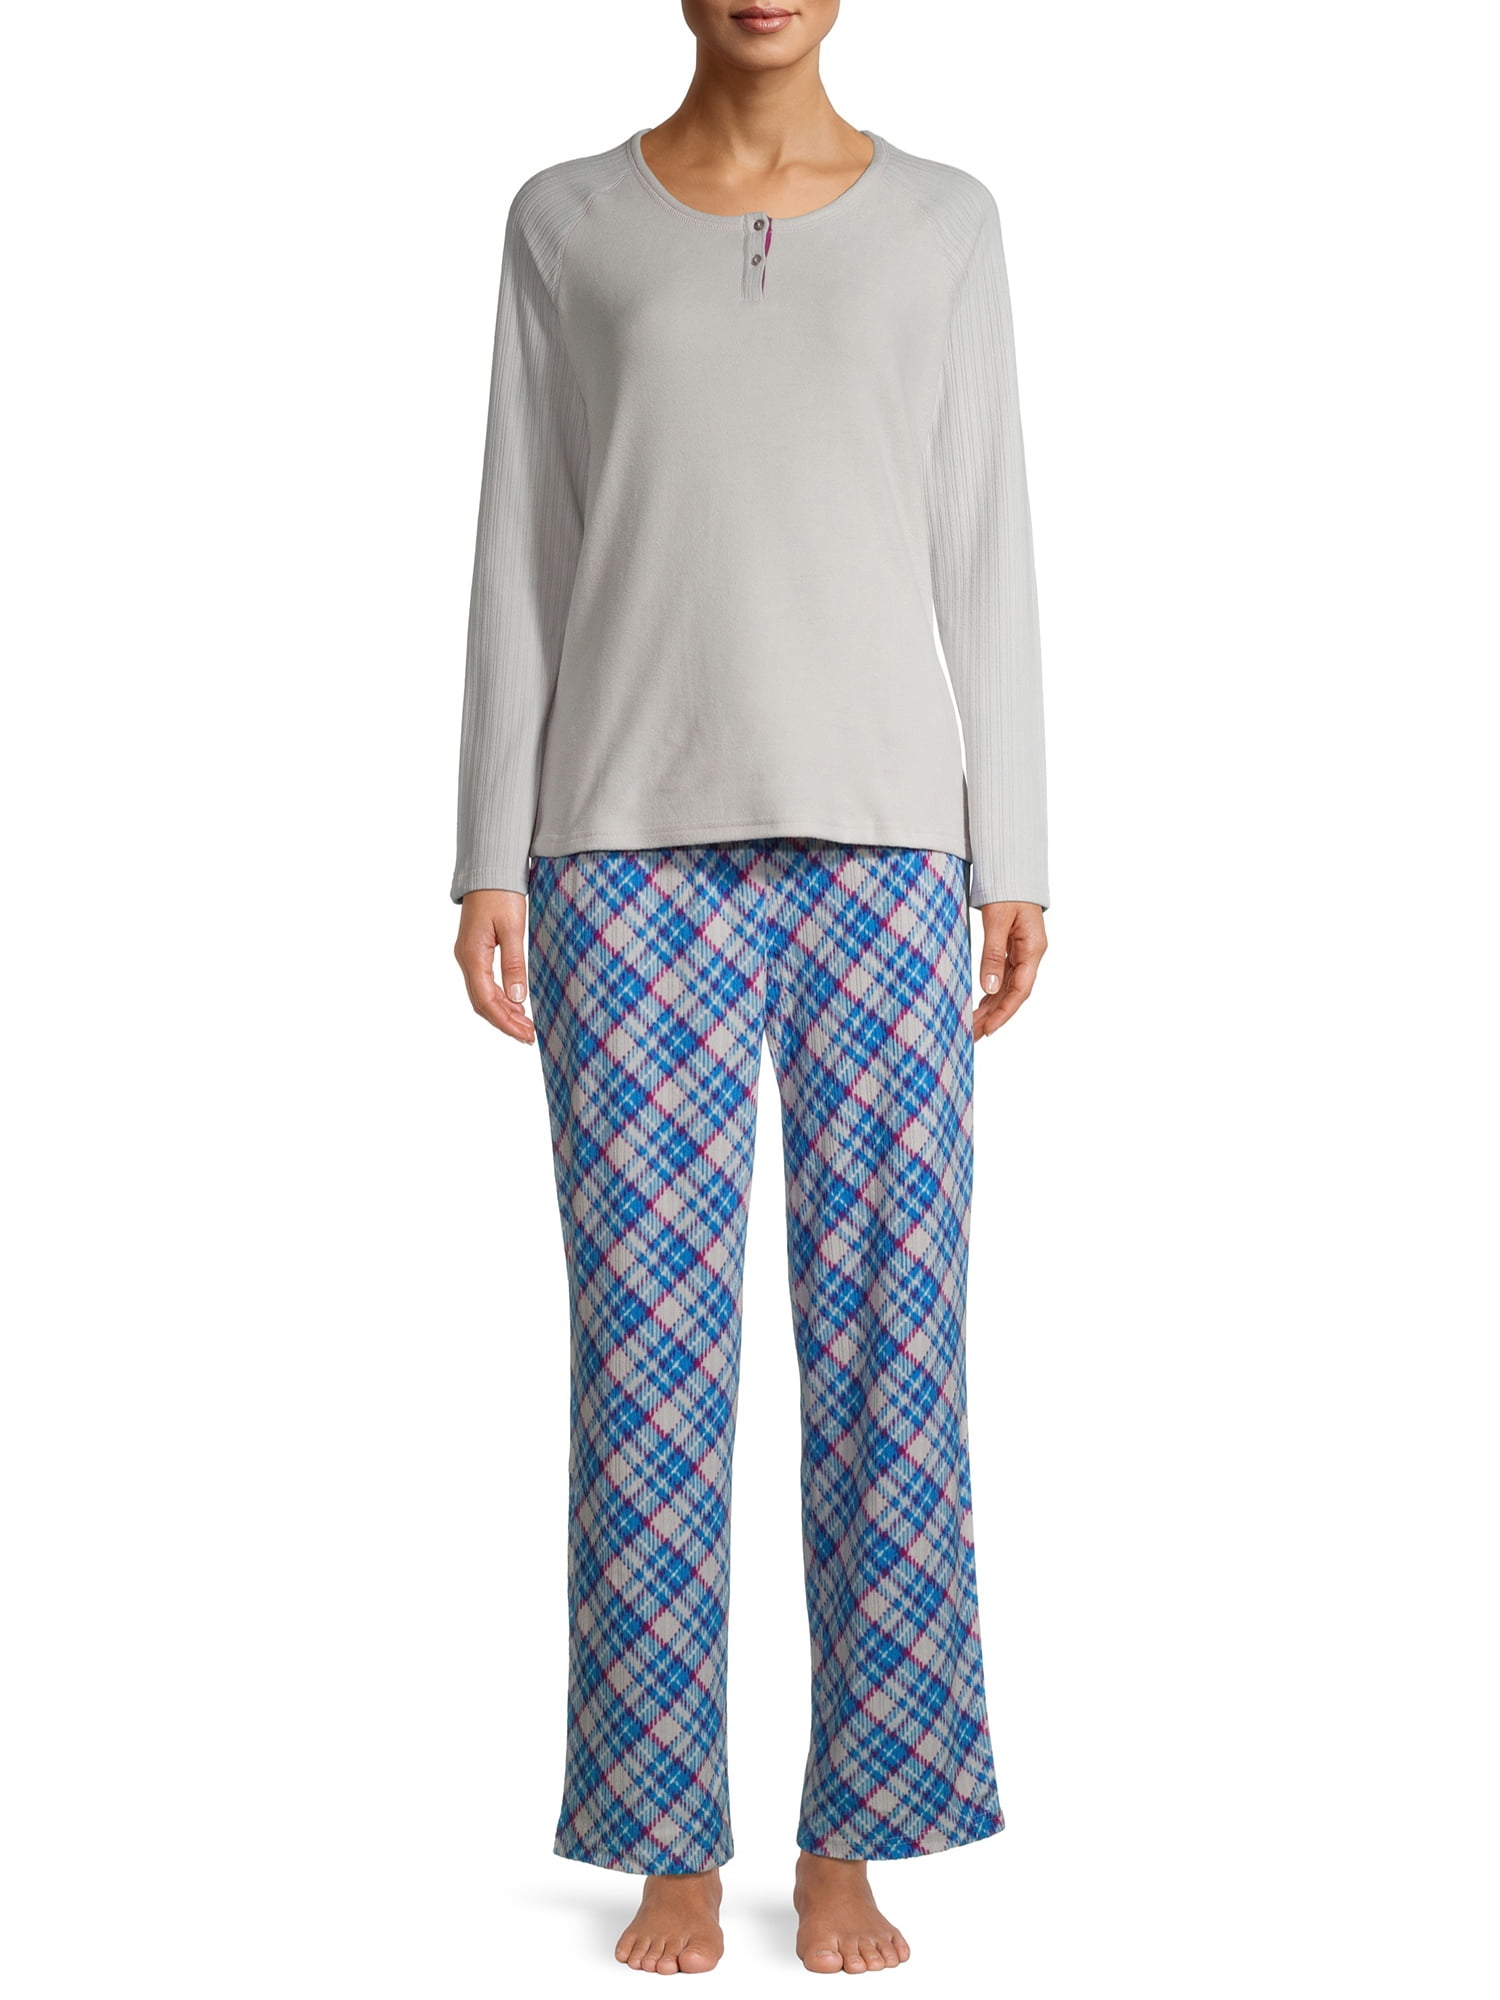 Hanes Women's Stretch Fleece Long Sleeve Top and Pants Pajama Set